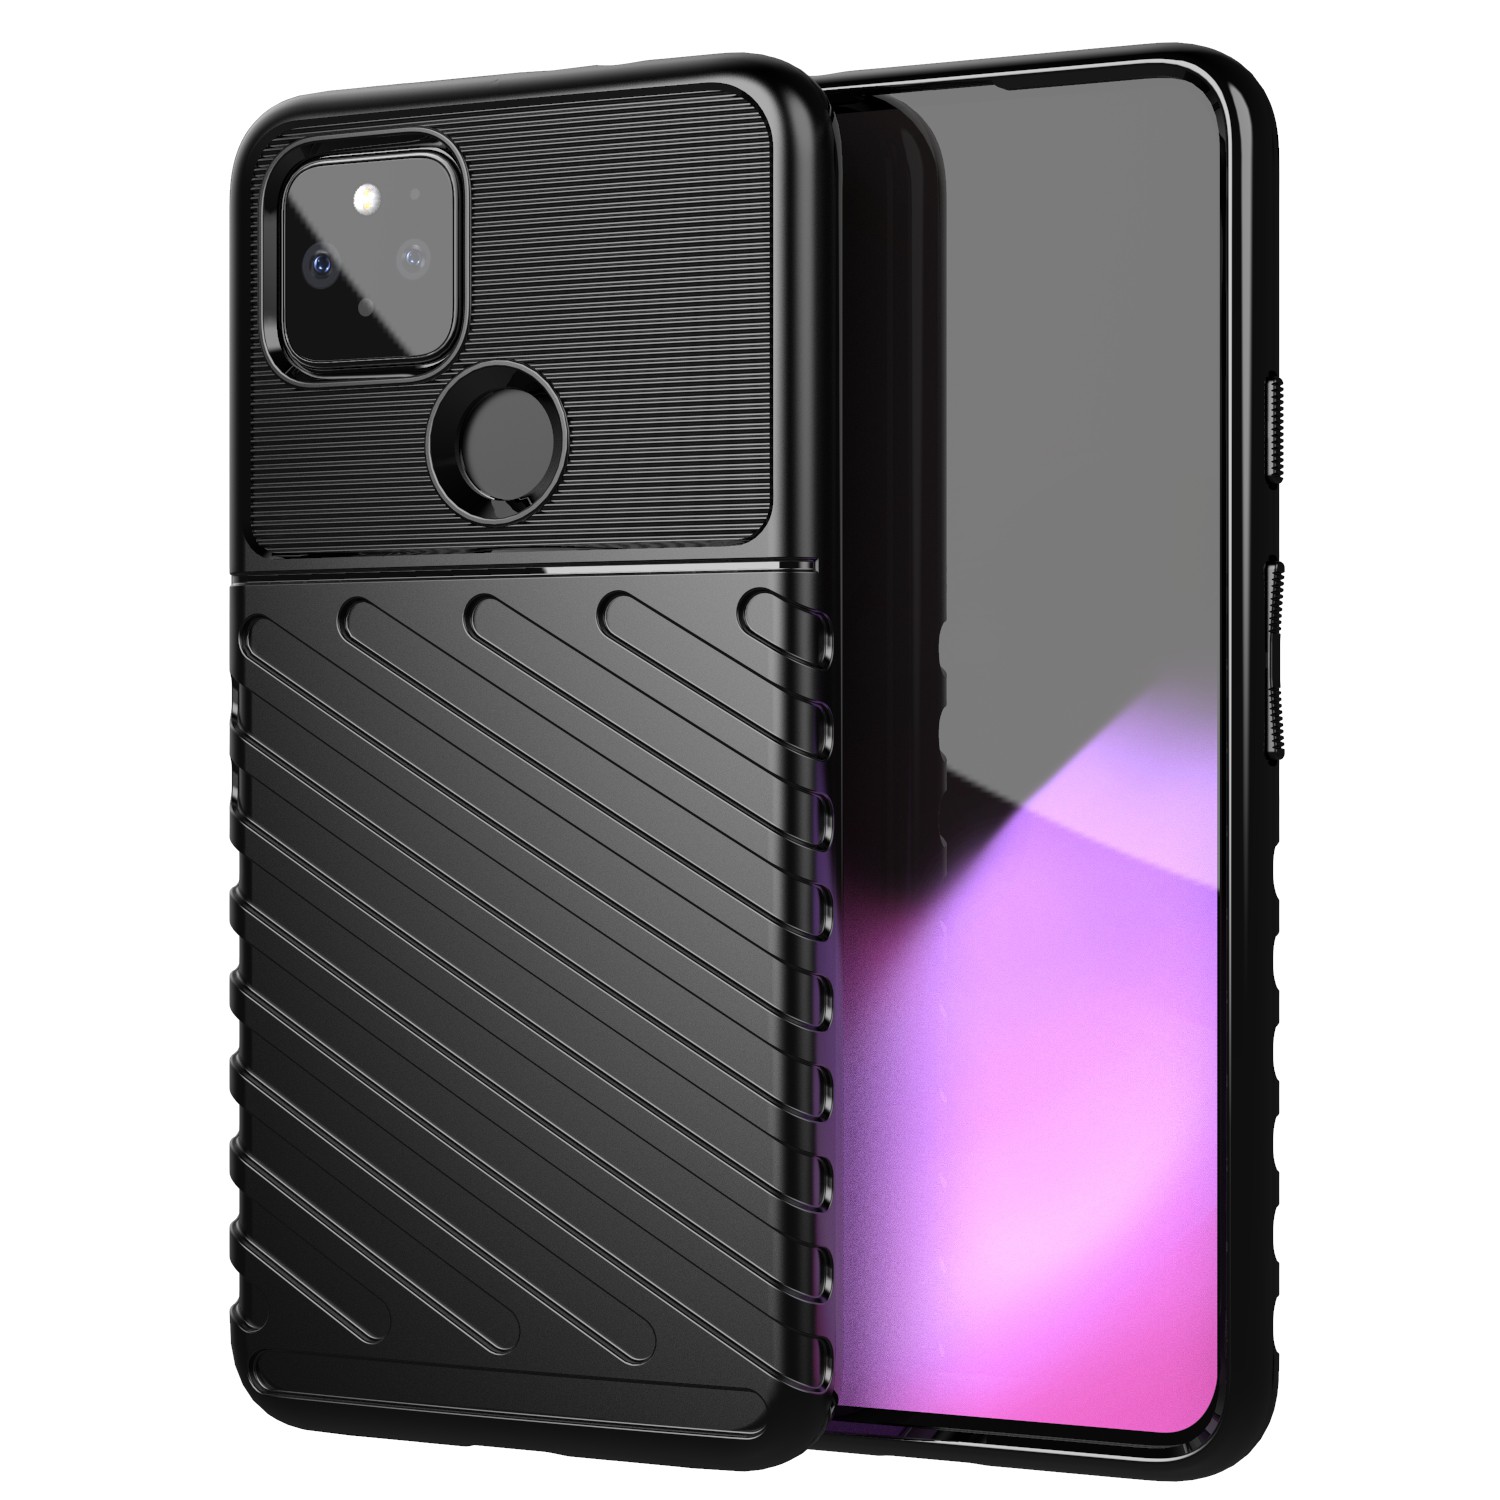 Ốp Lưng Chống Sốc Cho Điện Thoại Google Pixel 5 XL Phone Case Pixel 5 / Pixel 4A / Pixel 4XL / Pixel 4 Casing Shockproof Armor Rubber TPU Cover